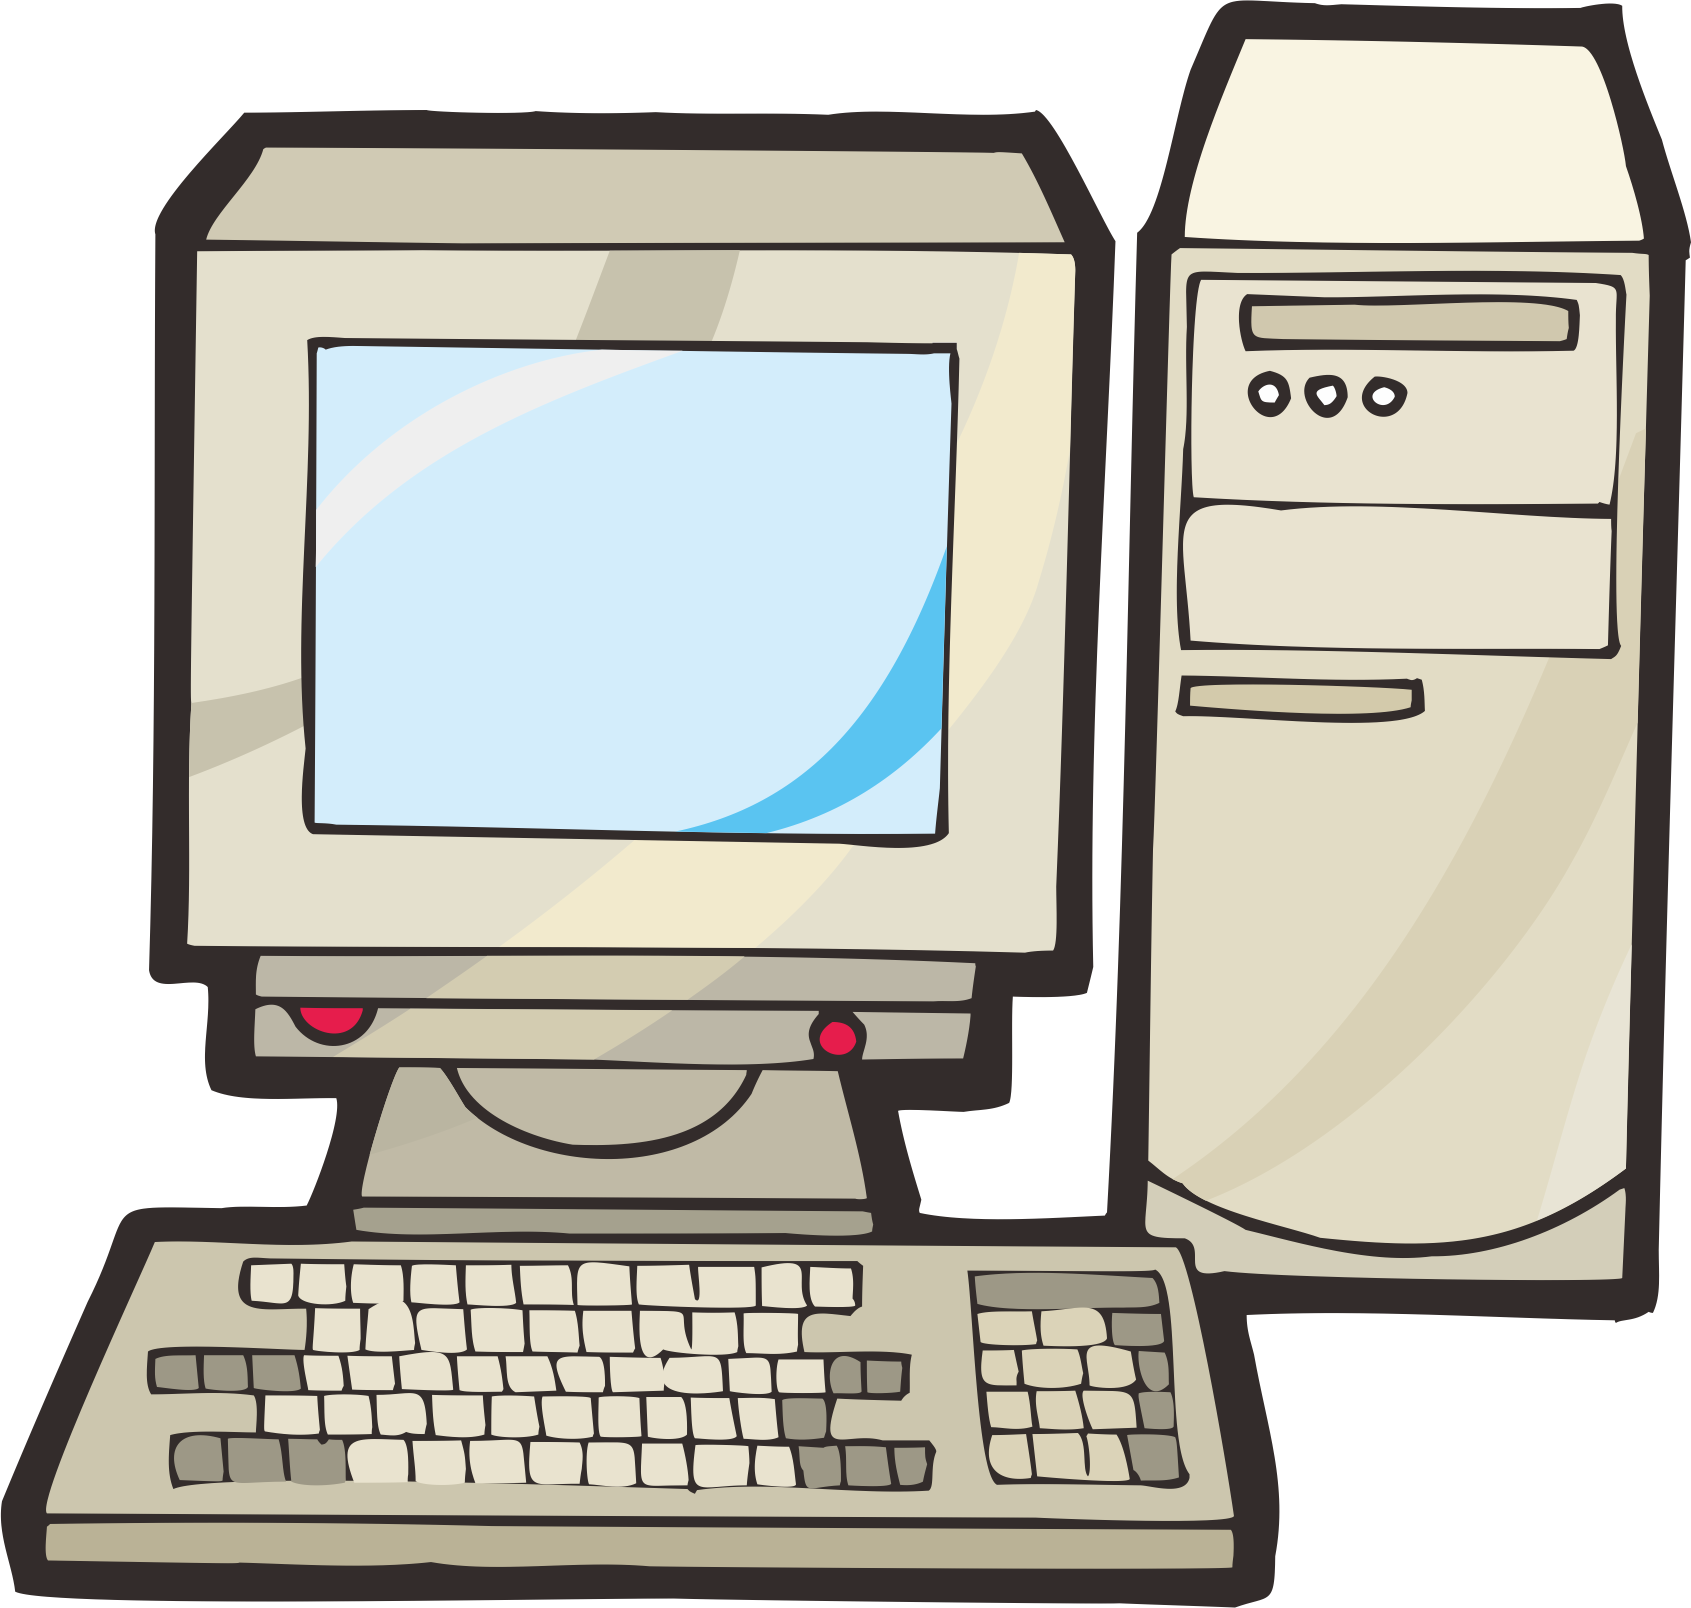 Включи картинки компьютер. Компьютер рисунок. Персональный компьютер. Компьютер мультяшный. Компьютер без фона.